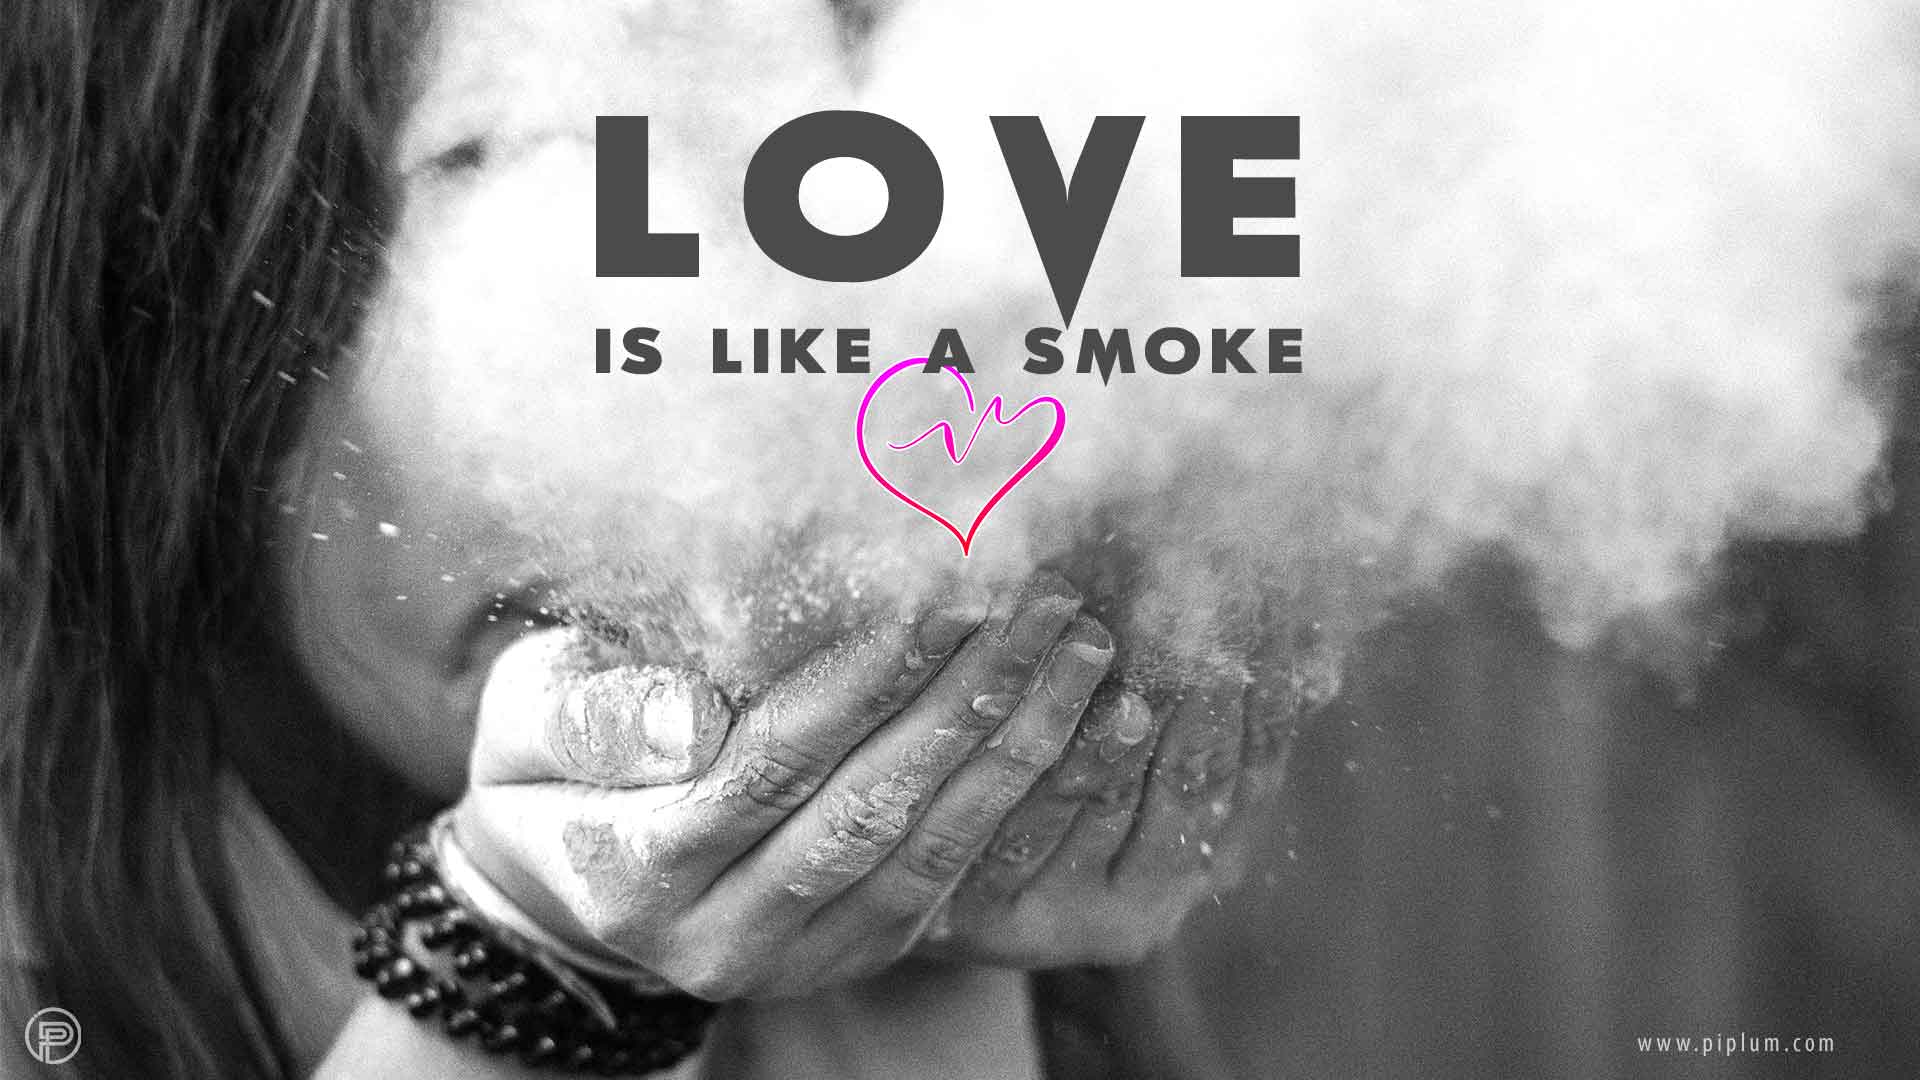 Love-Smoke-inspirational-quote